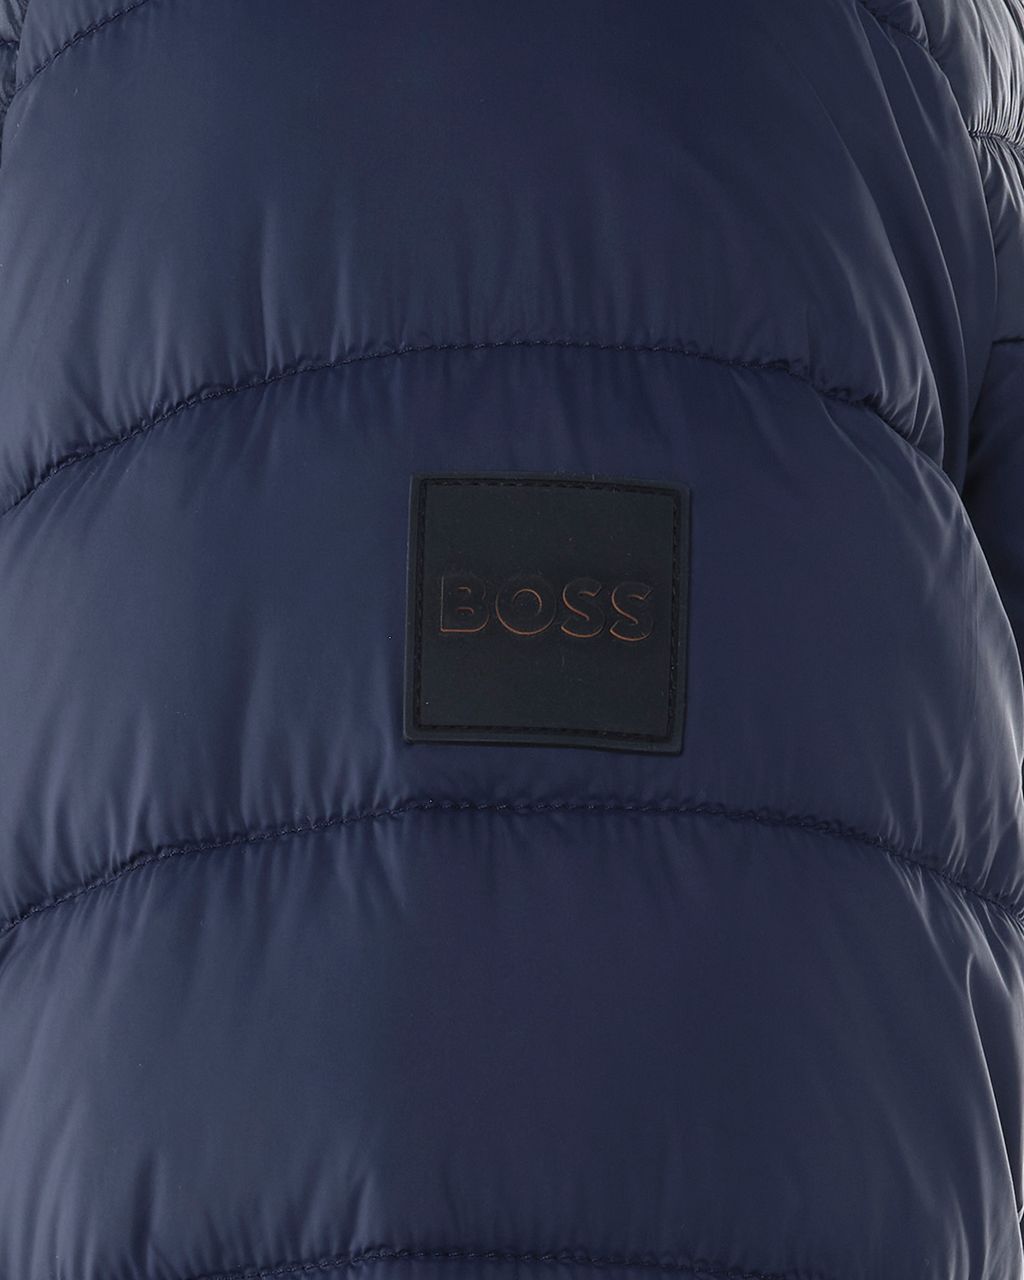 Hugo Boss Casual Gewatteerde Jas Donker blauw 074139-001-48